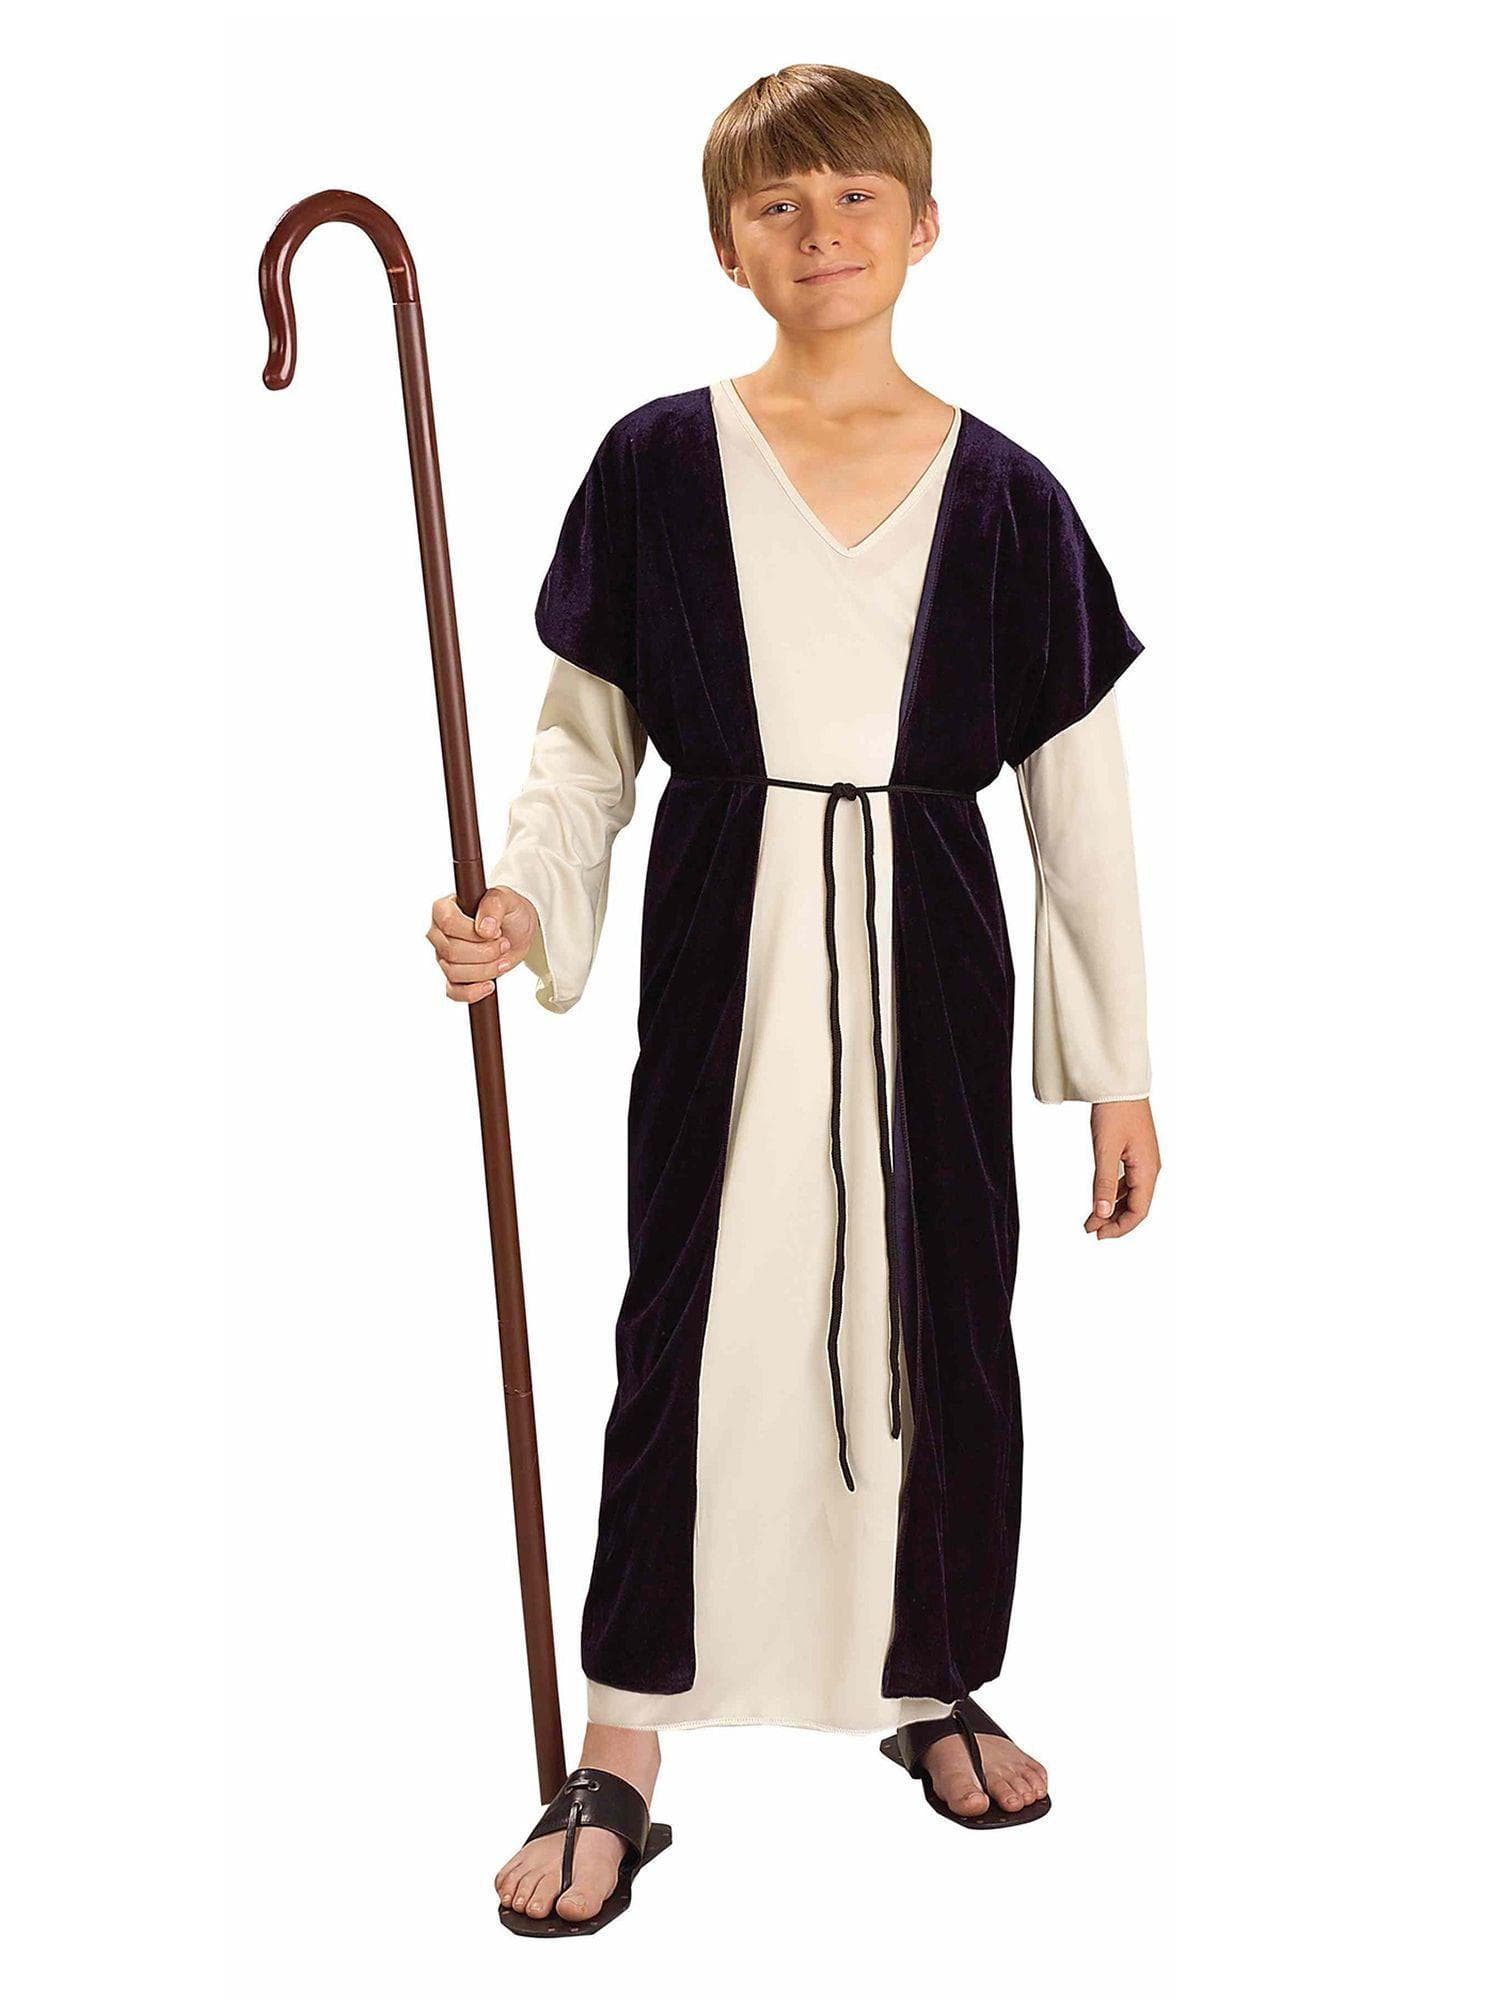 Boys' Shepherd Costume - costumes.com